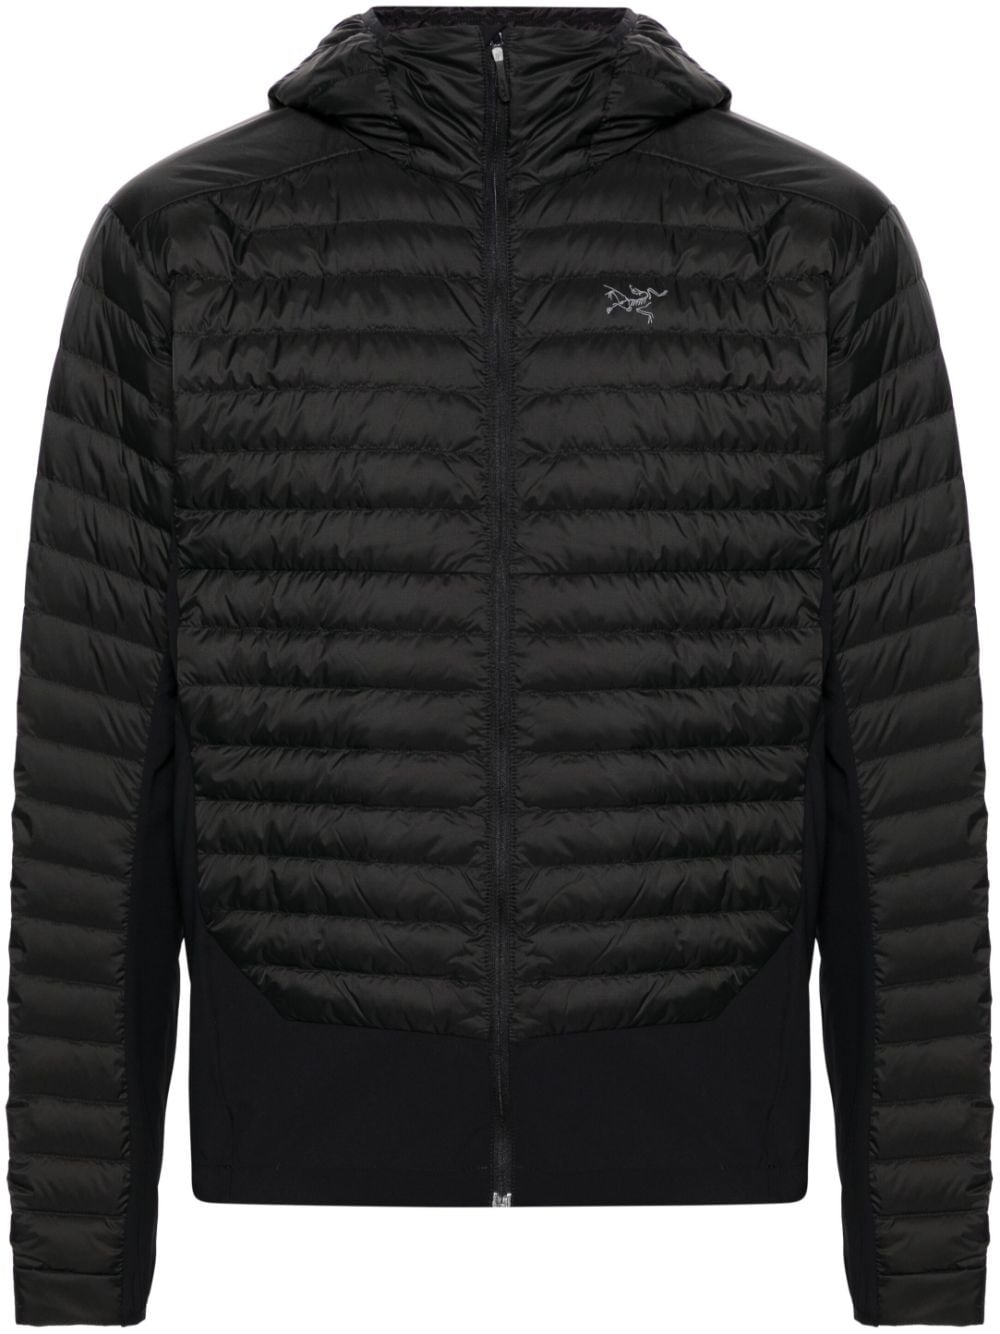 Cerium Hybrid lightweight puffer jacket